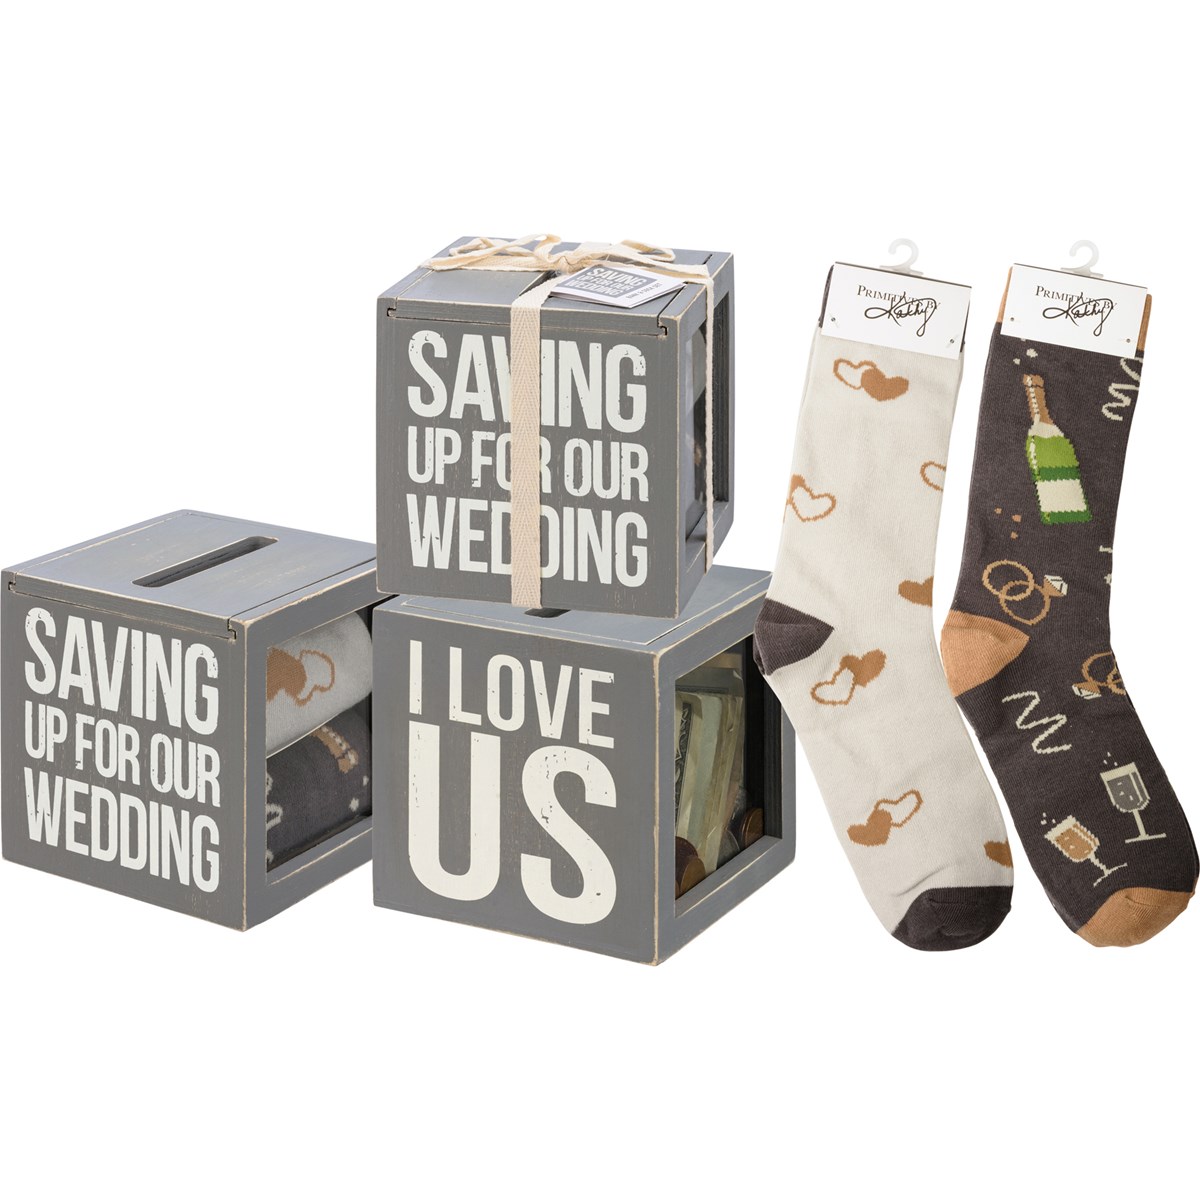 Bank & Socks Set - Saving Up For Our Wedding - Bank: 4.25" x 4.25" x 4.25", Socks: One Size Fits Most - Wood, Glass, Cotton, Nylon, Spandex, Ribbon